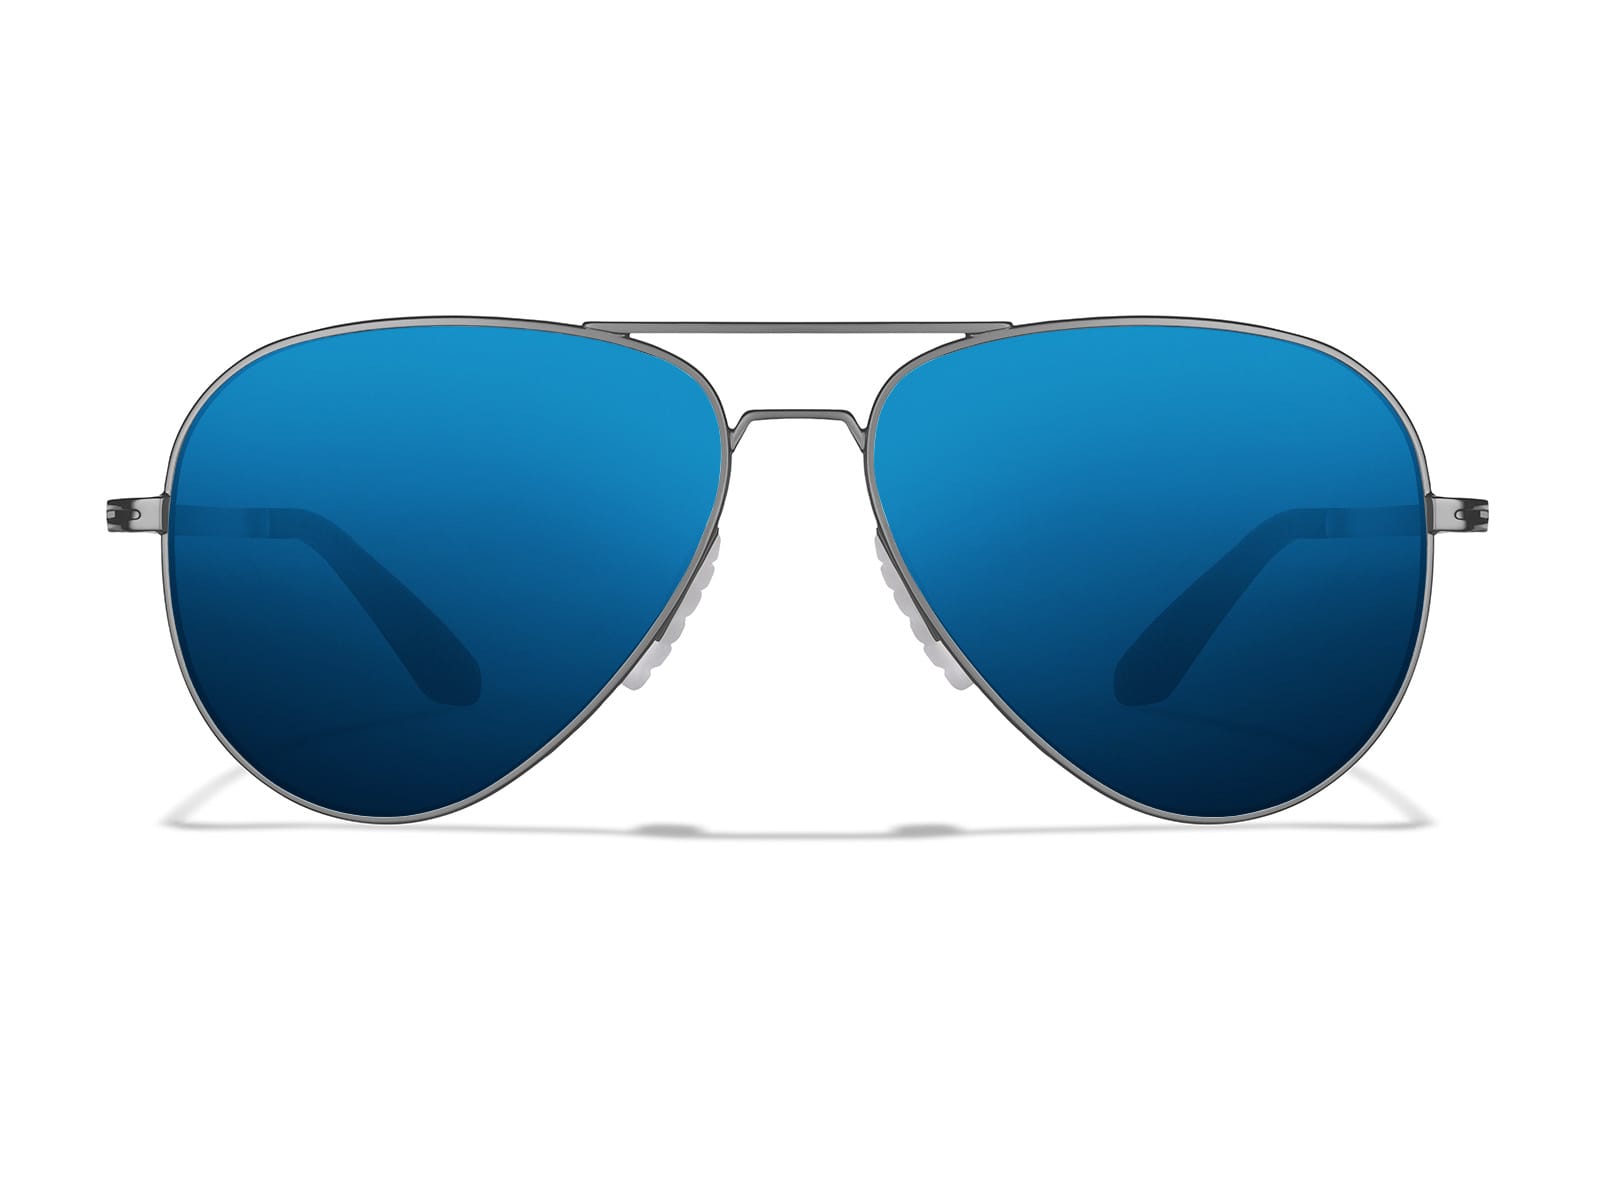 Premium Photo | New dark aviator glasses on grey concrete background